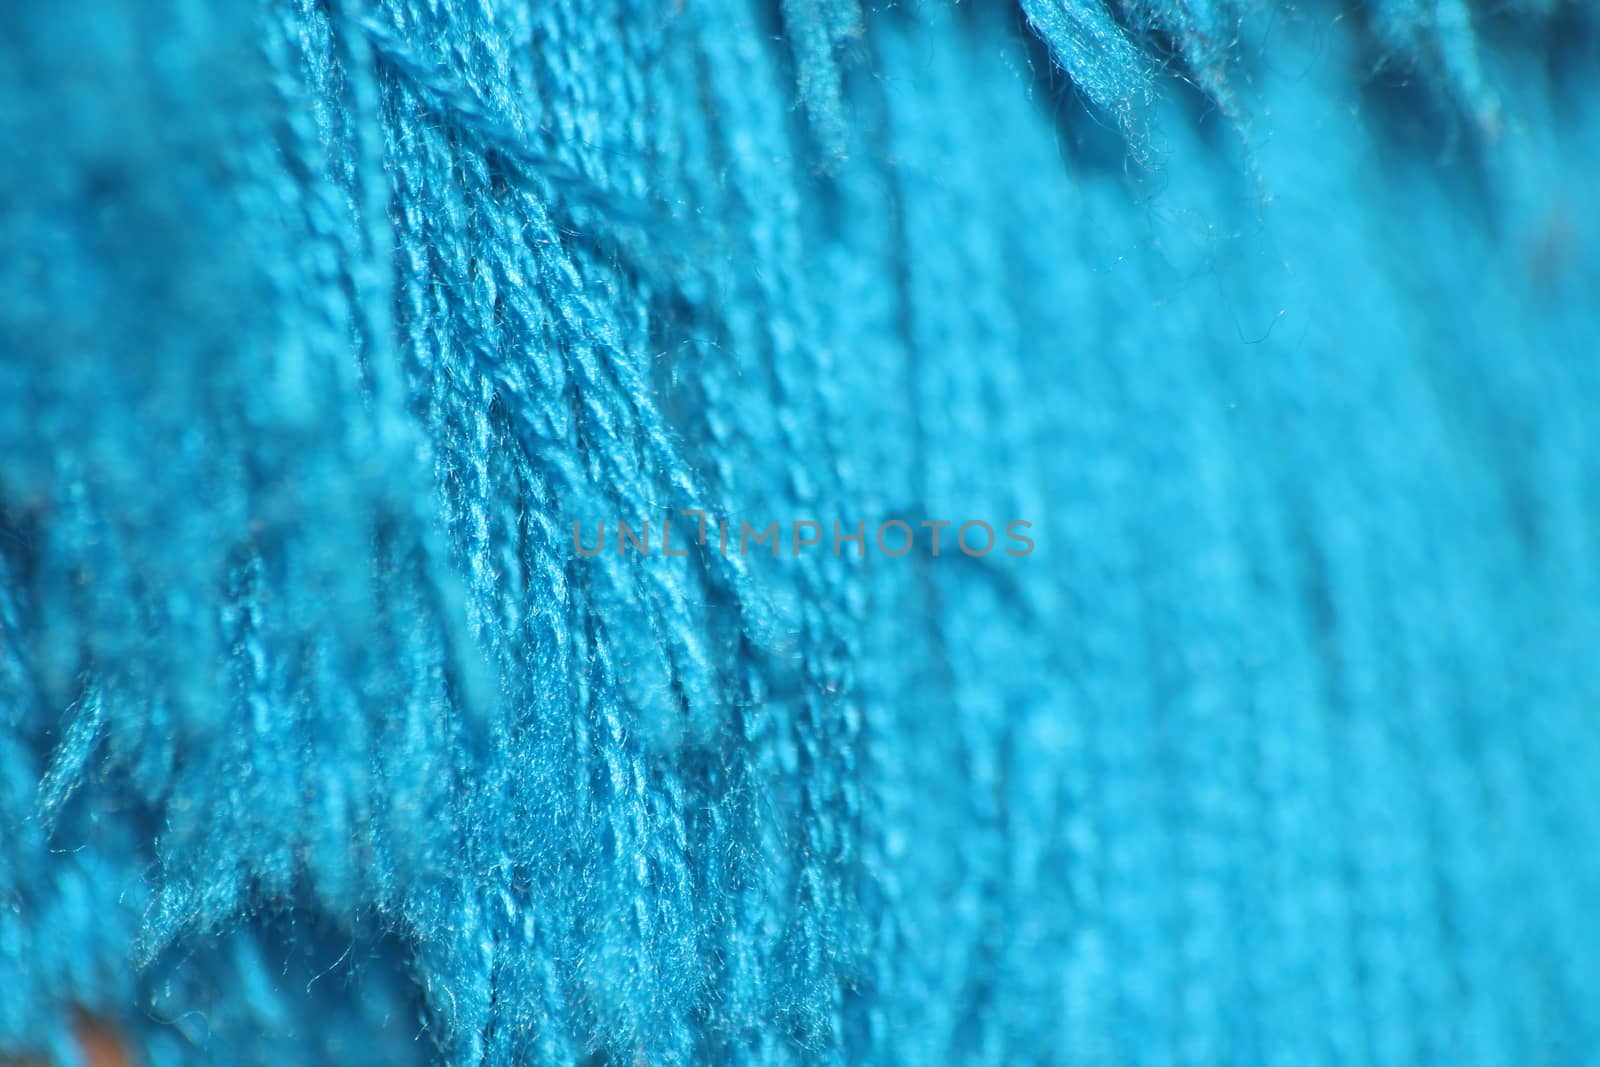 macro photo as background close up of cloth fibers.